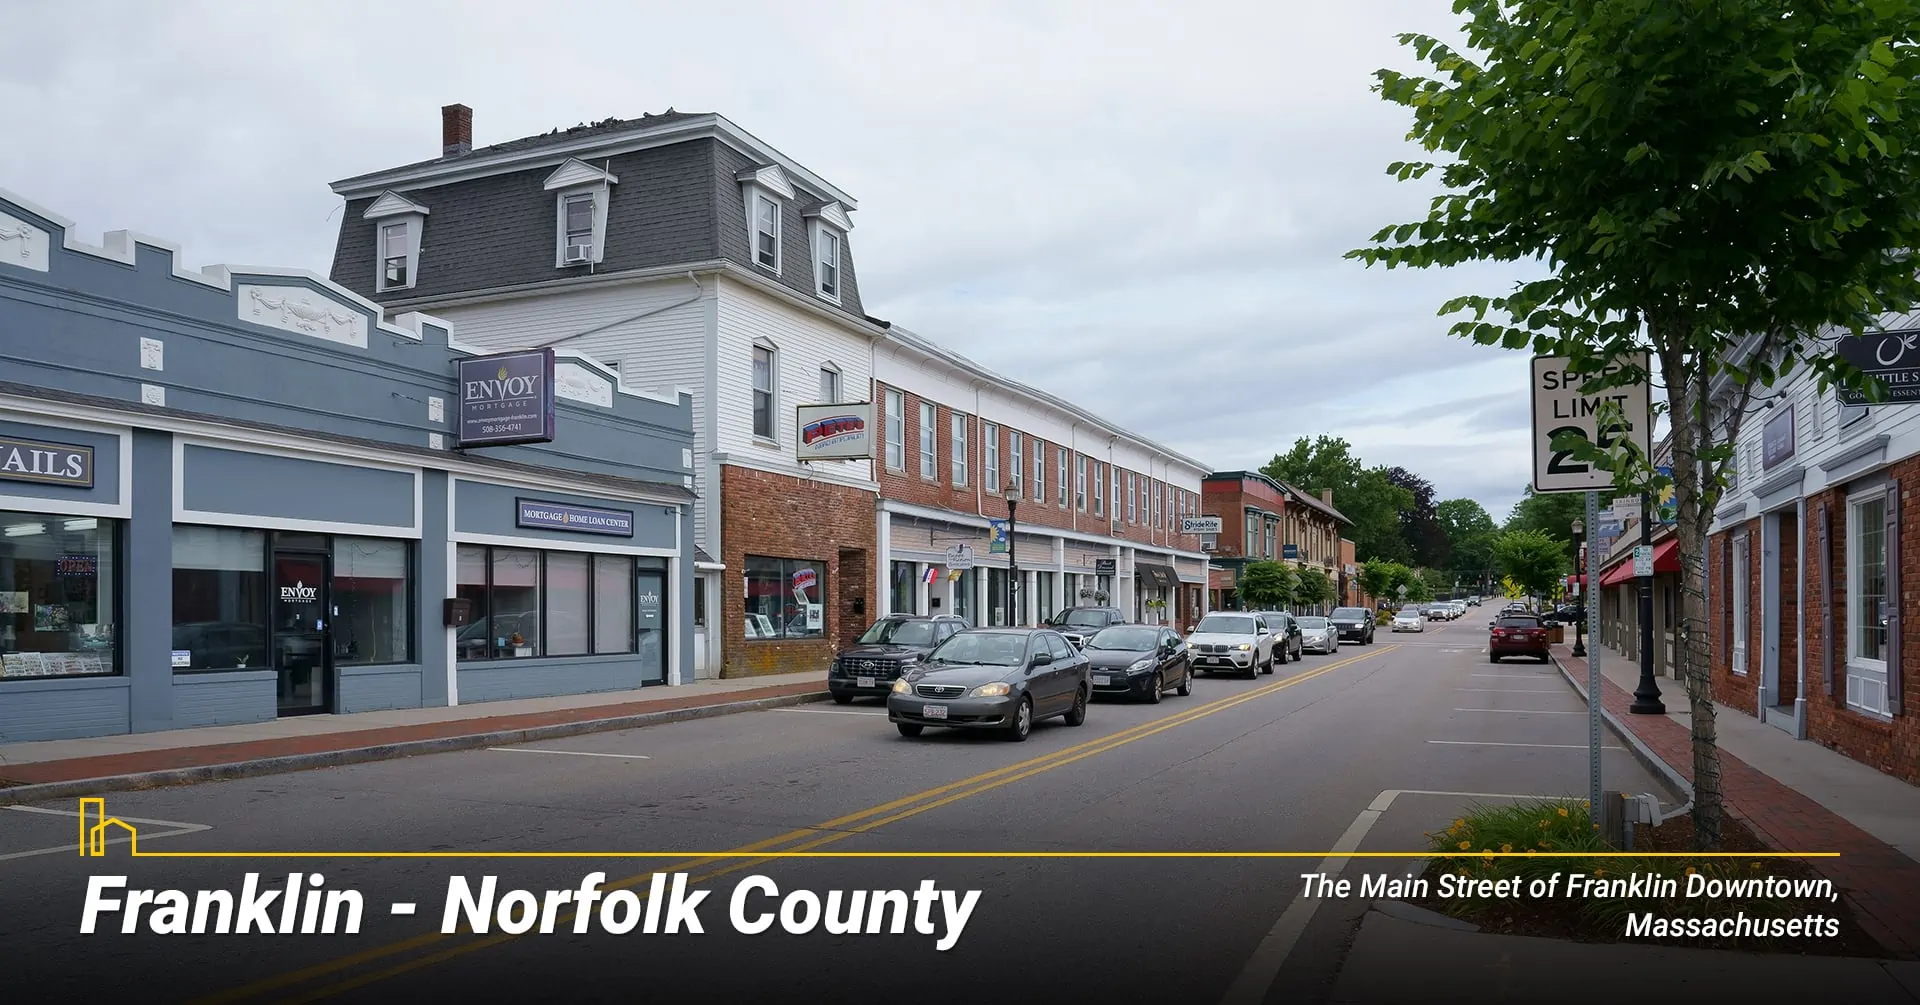 Franklin - Norfolk County